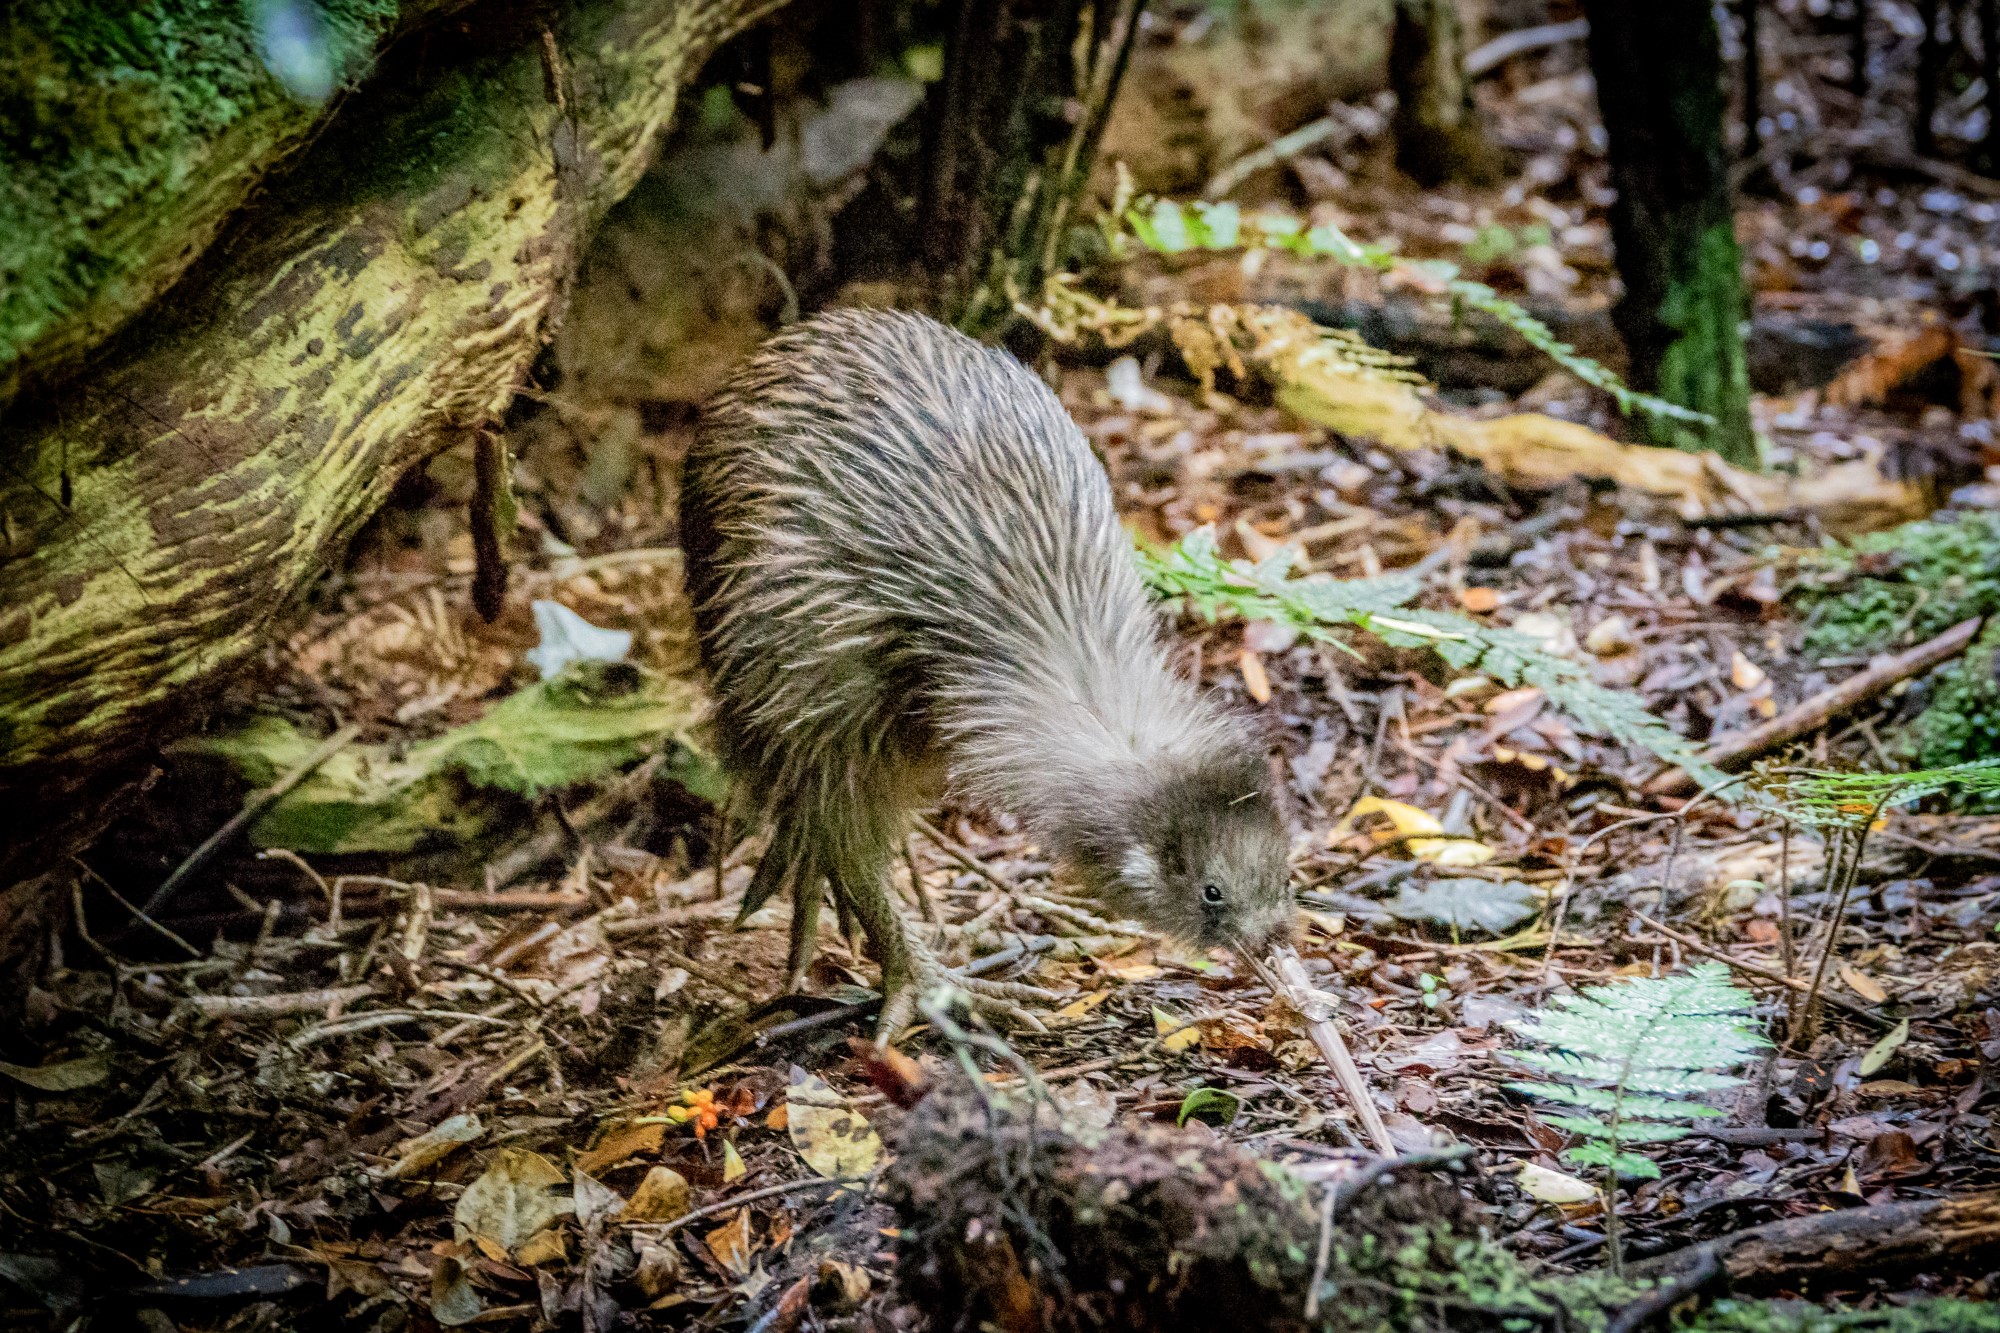 Kiwi bird foraging in undergrowth on Ulva Island, New Zealand